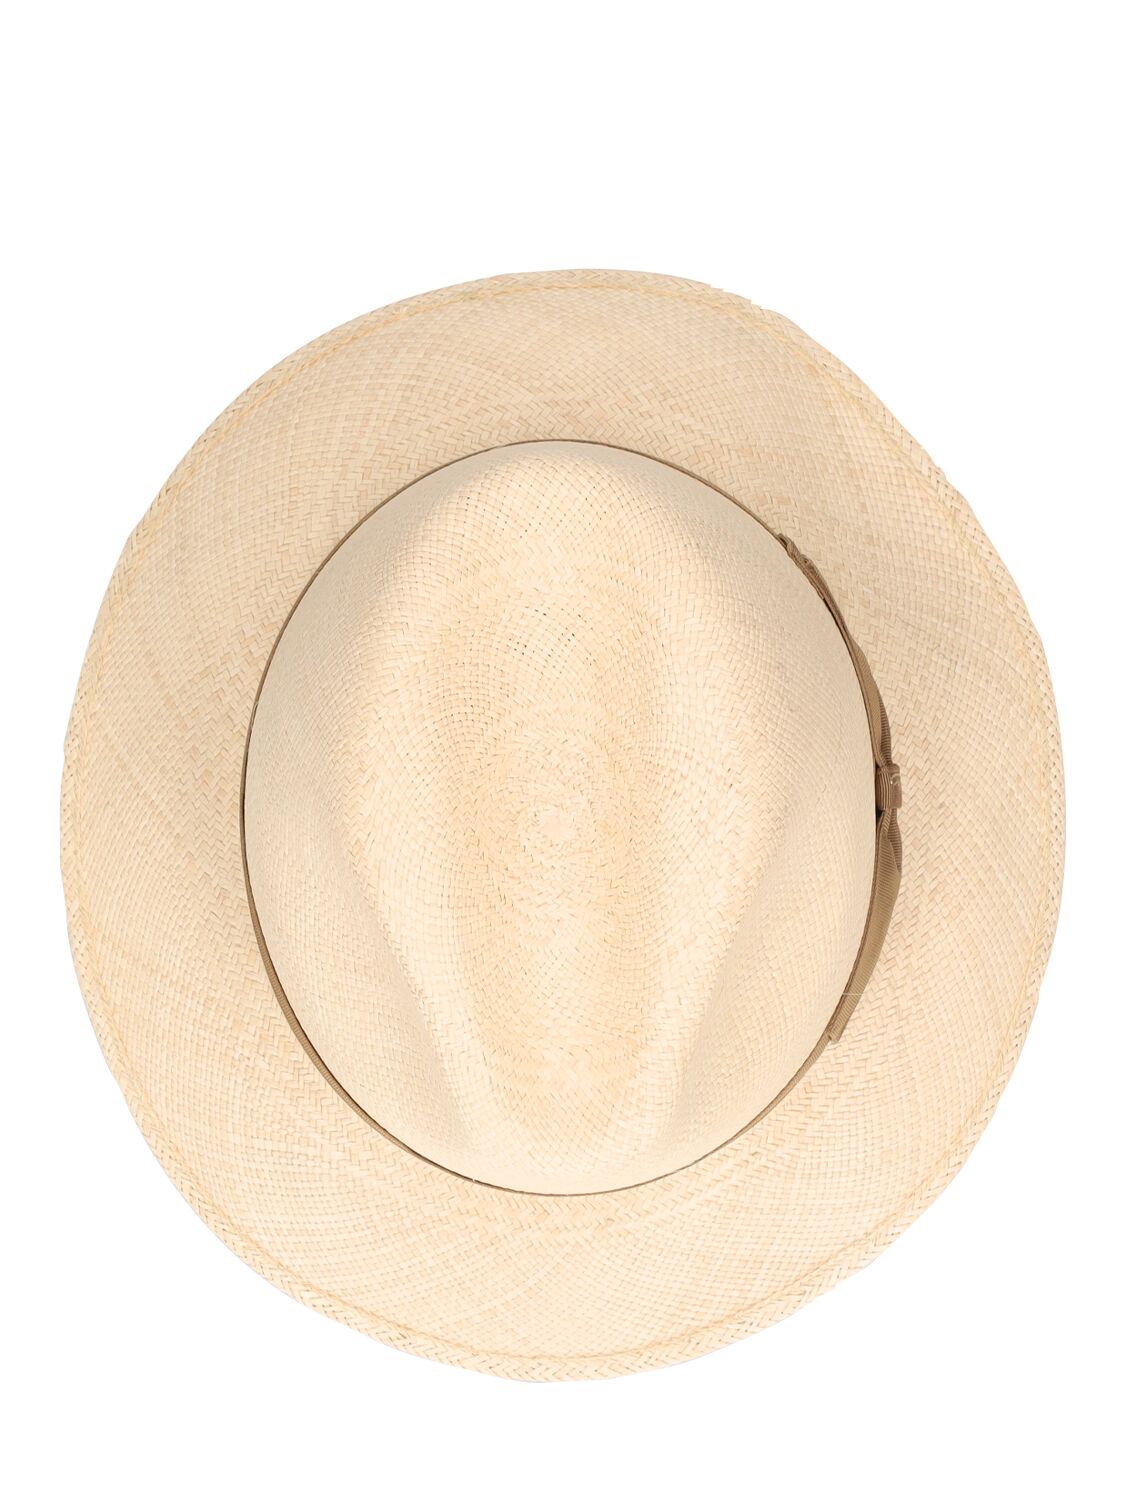 Shop Borsalino Federico 6cm Brim Straw Panama Hat In Natural,camel